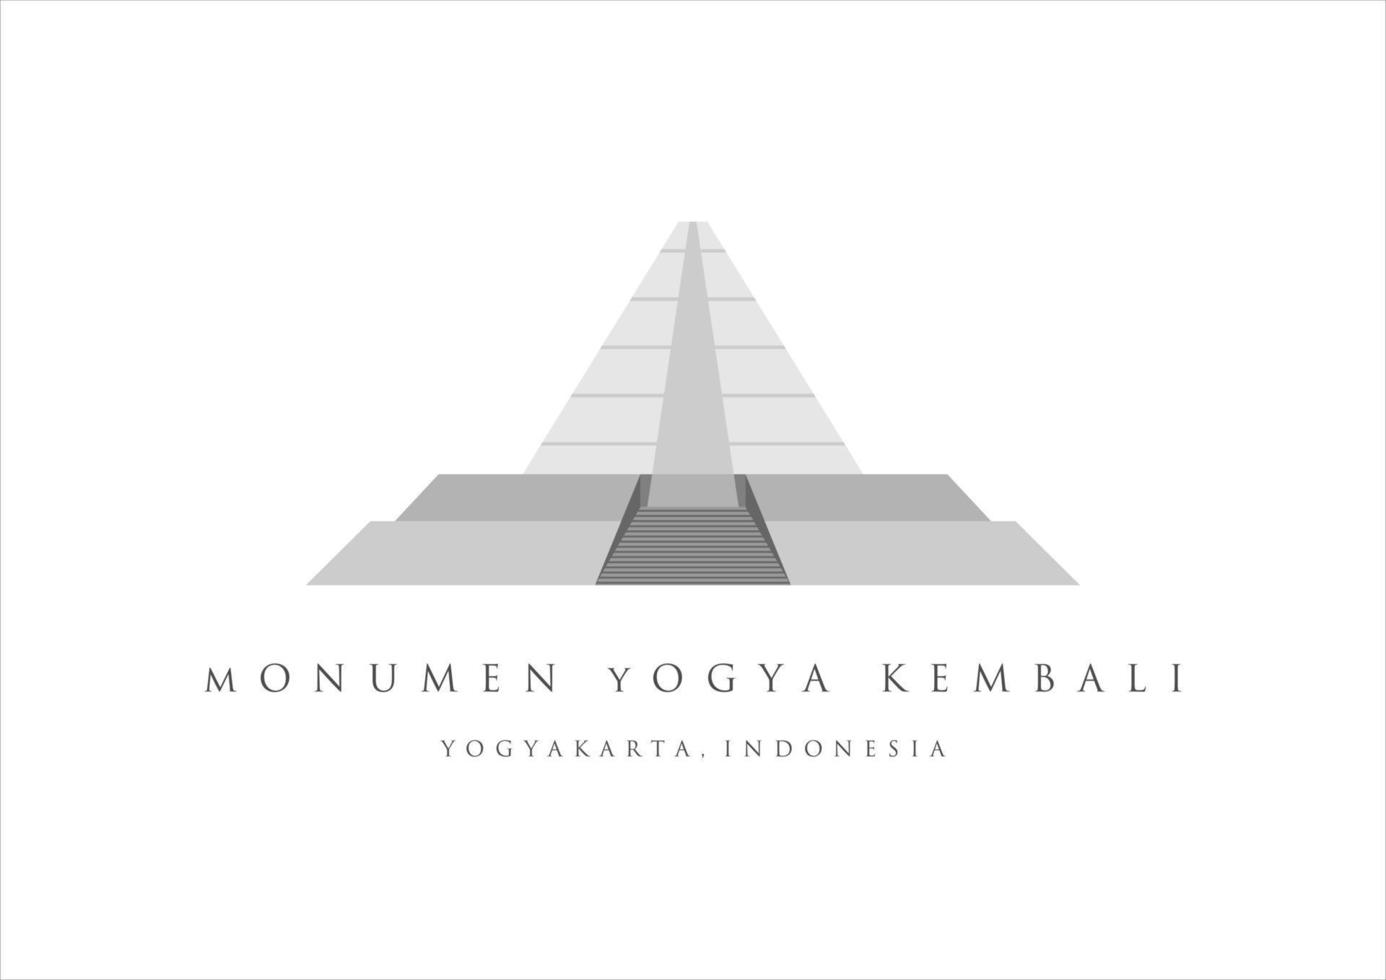 Yogyakarta monument gebeld monument yoga kembal. mijlpaal gebouw van yogakarta. erfgoed toerisme van Indonesië. jogjakarta oud gebouw vector illustratie